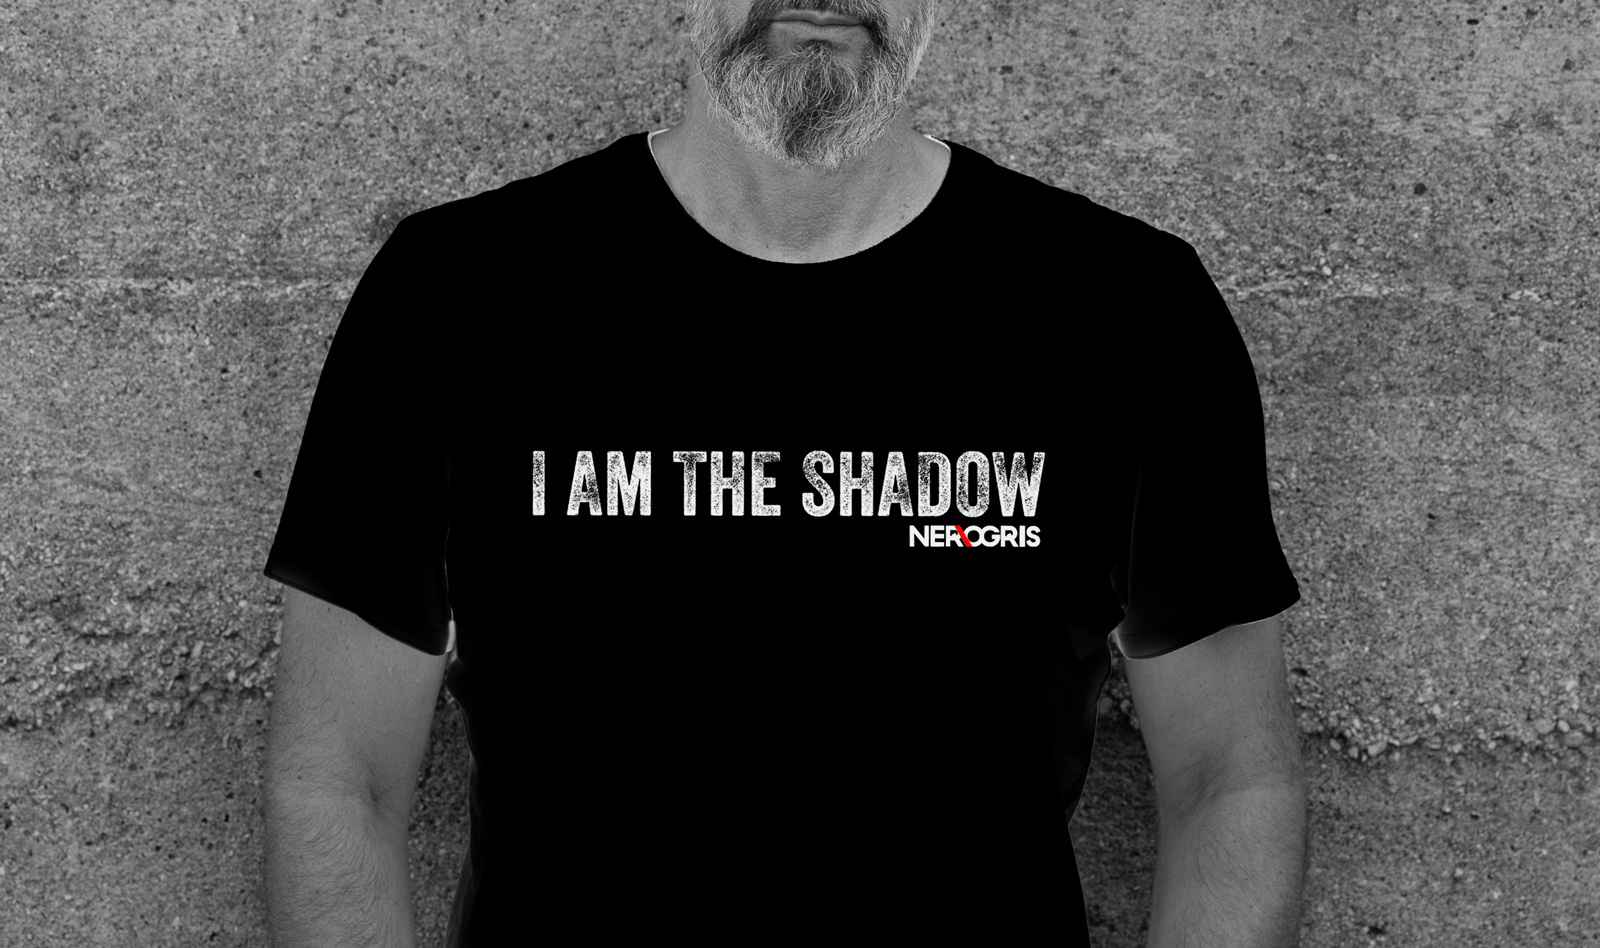 NER\OGRIS "Shadow" Shirt